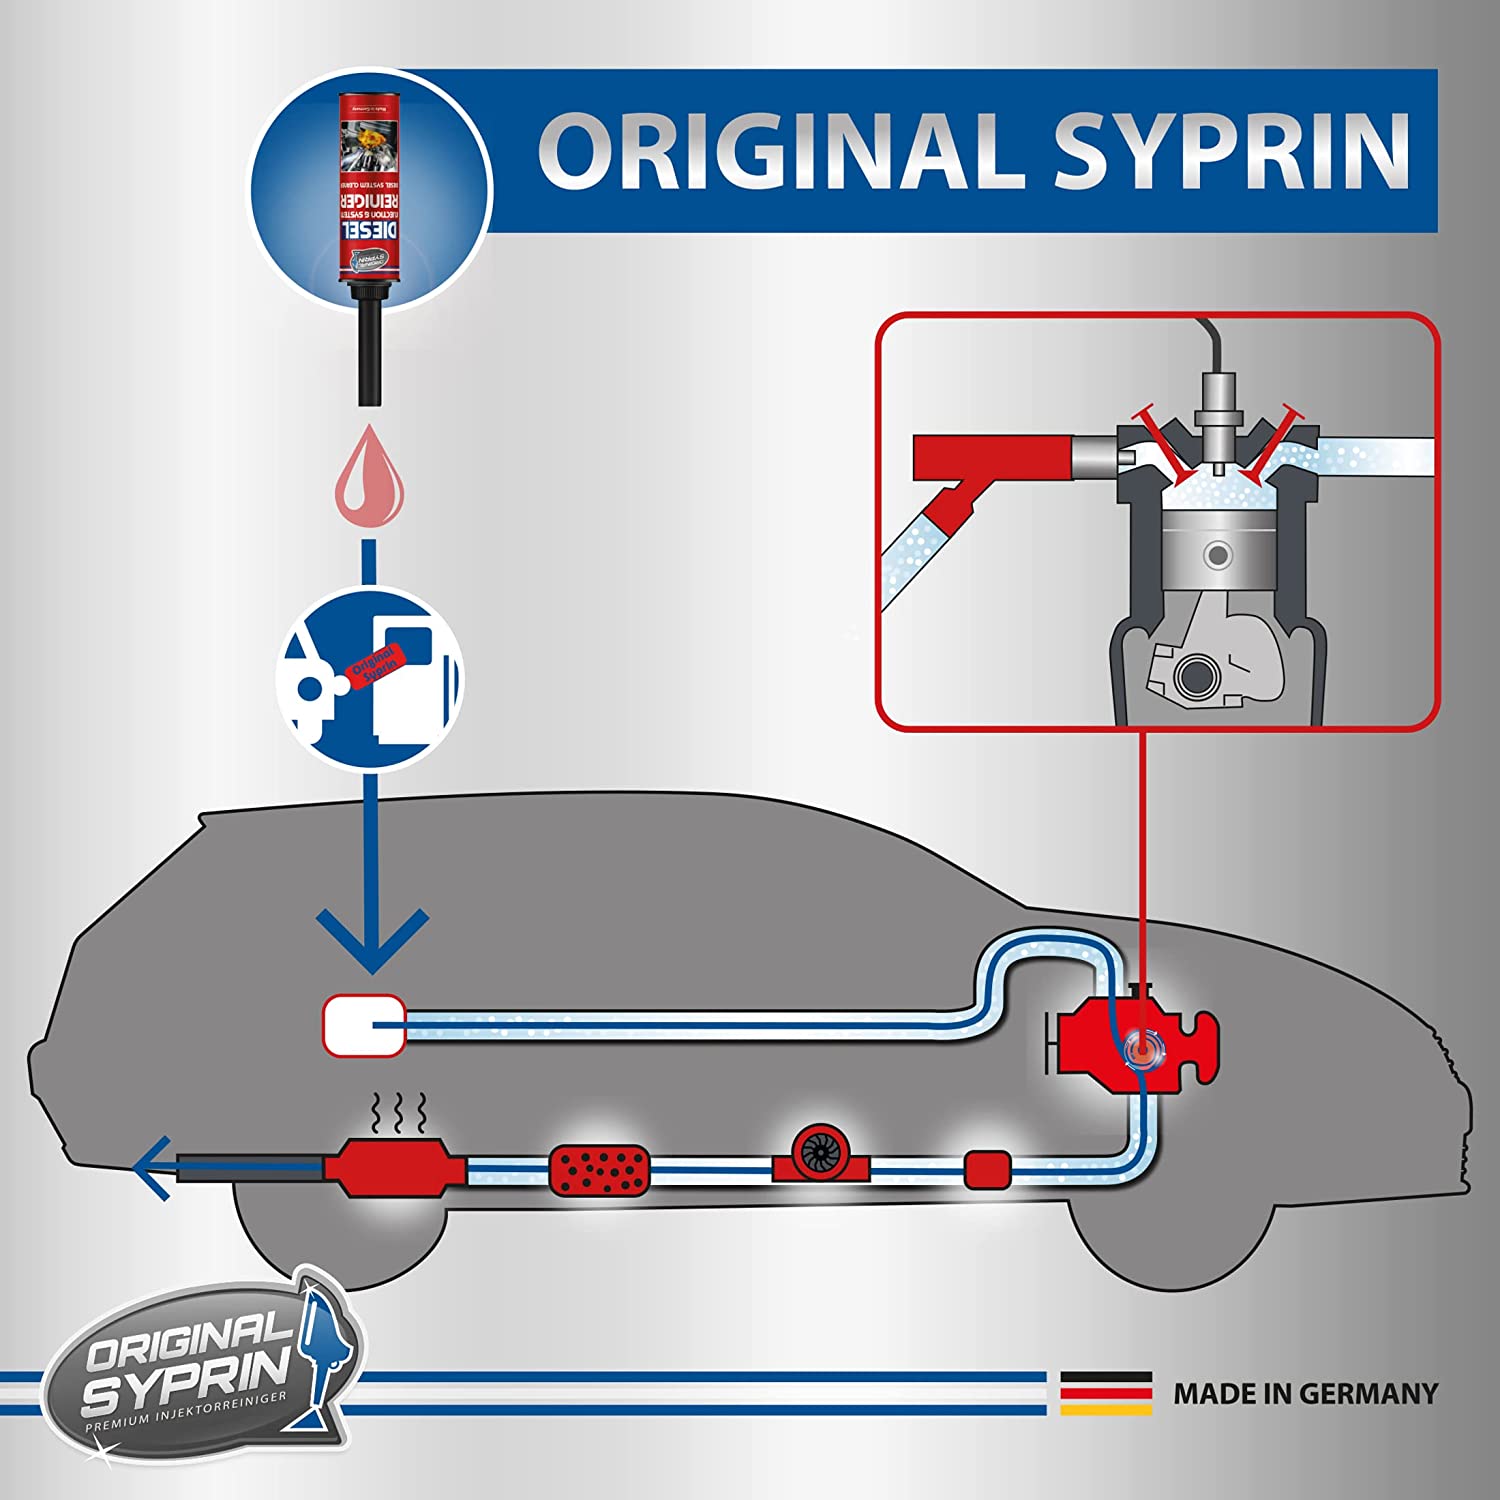 ORIGINAL SYPRIN Diesel Injektor und System Reiniger - 500 ml – syprin